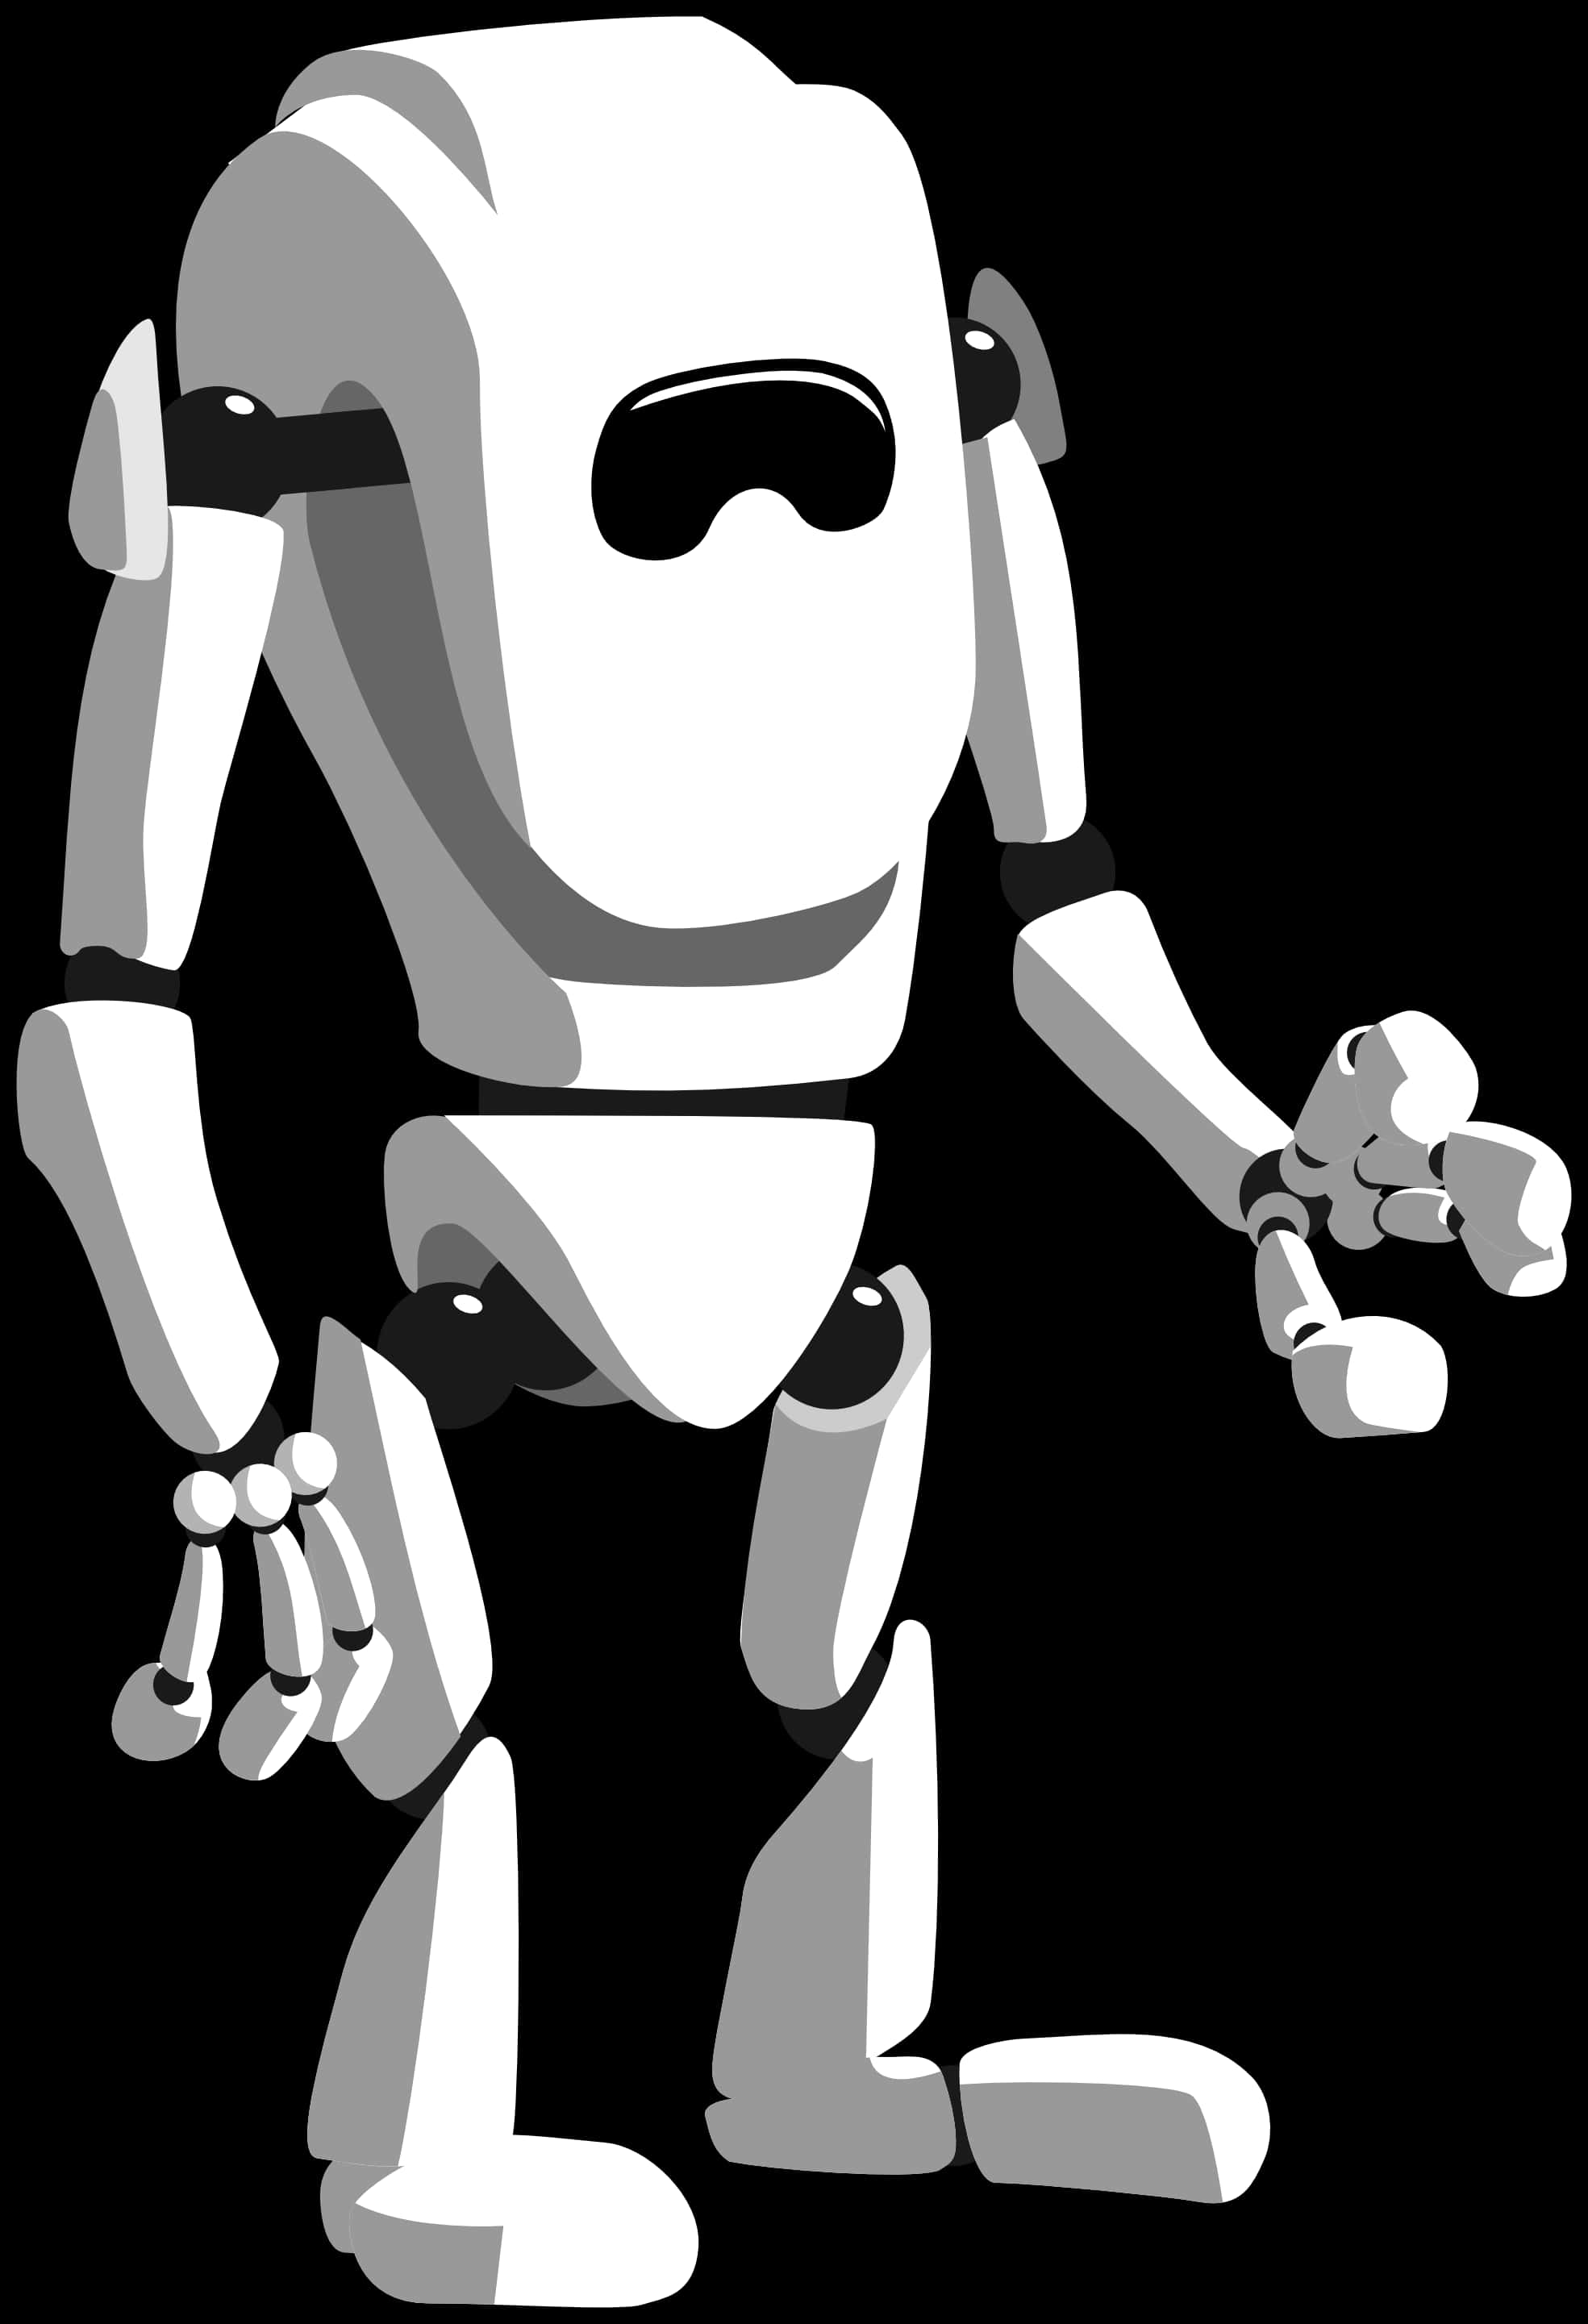 Monochrome Robot Illustration PNG image